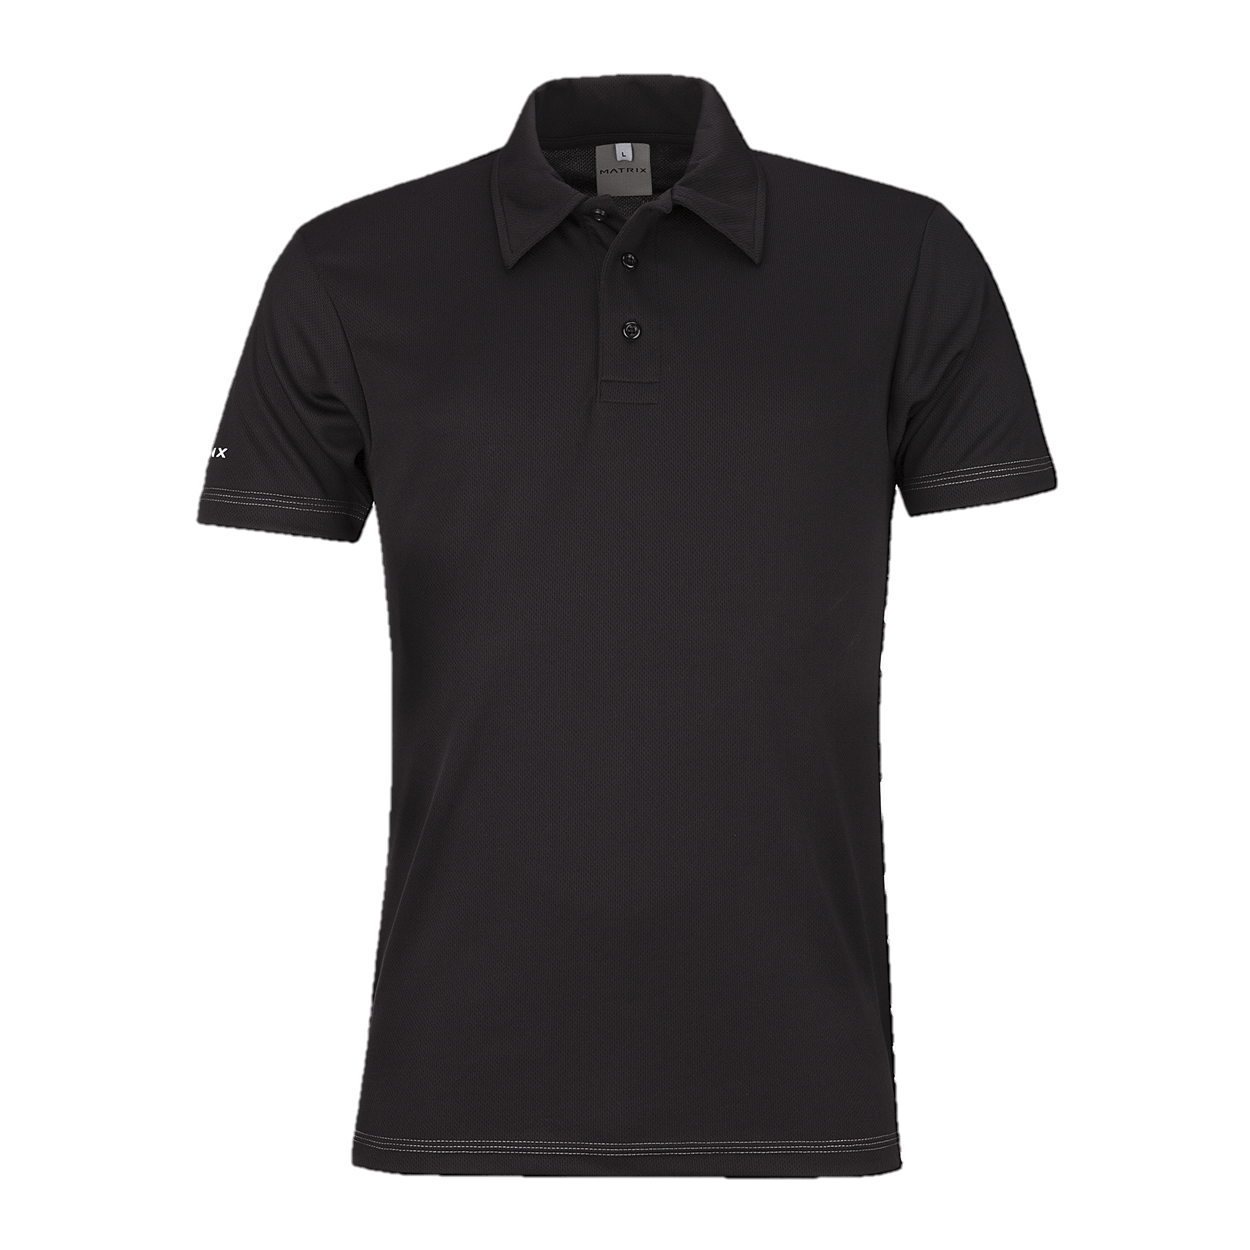 Black Polo Shirt Png Image PNG Image